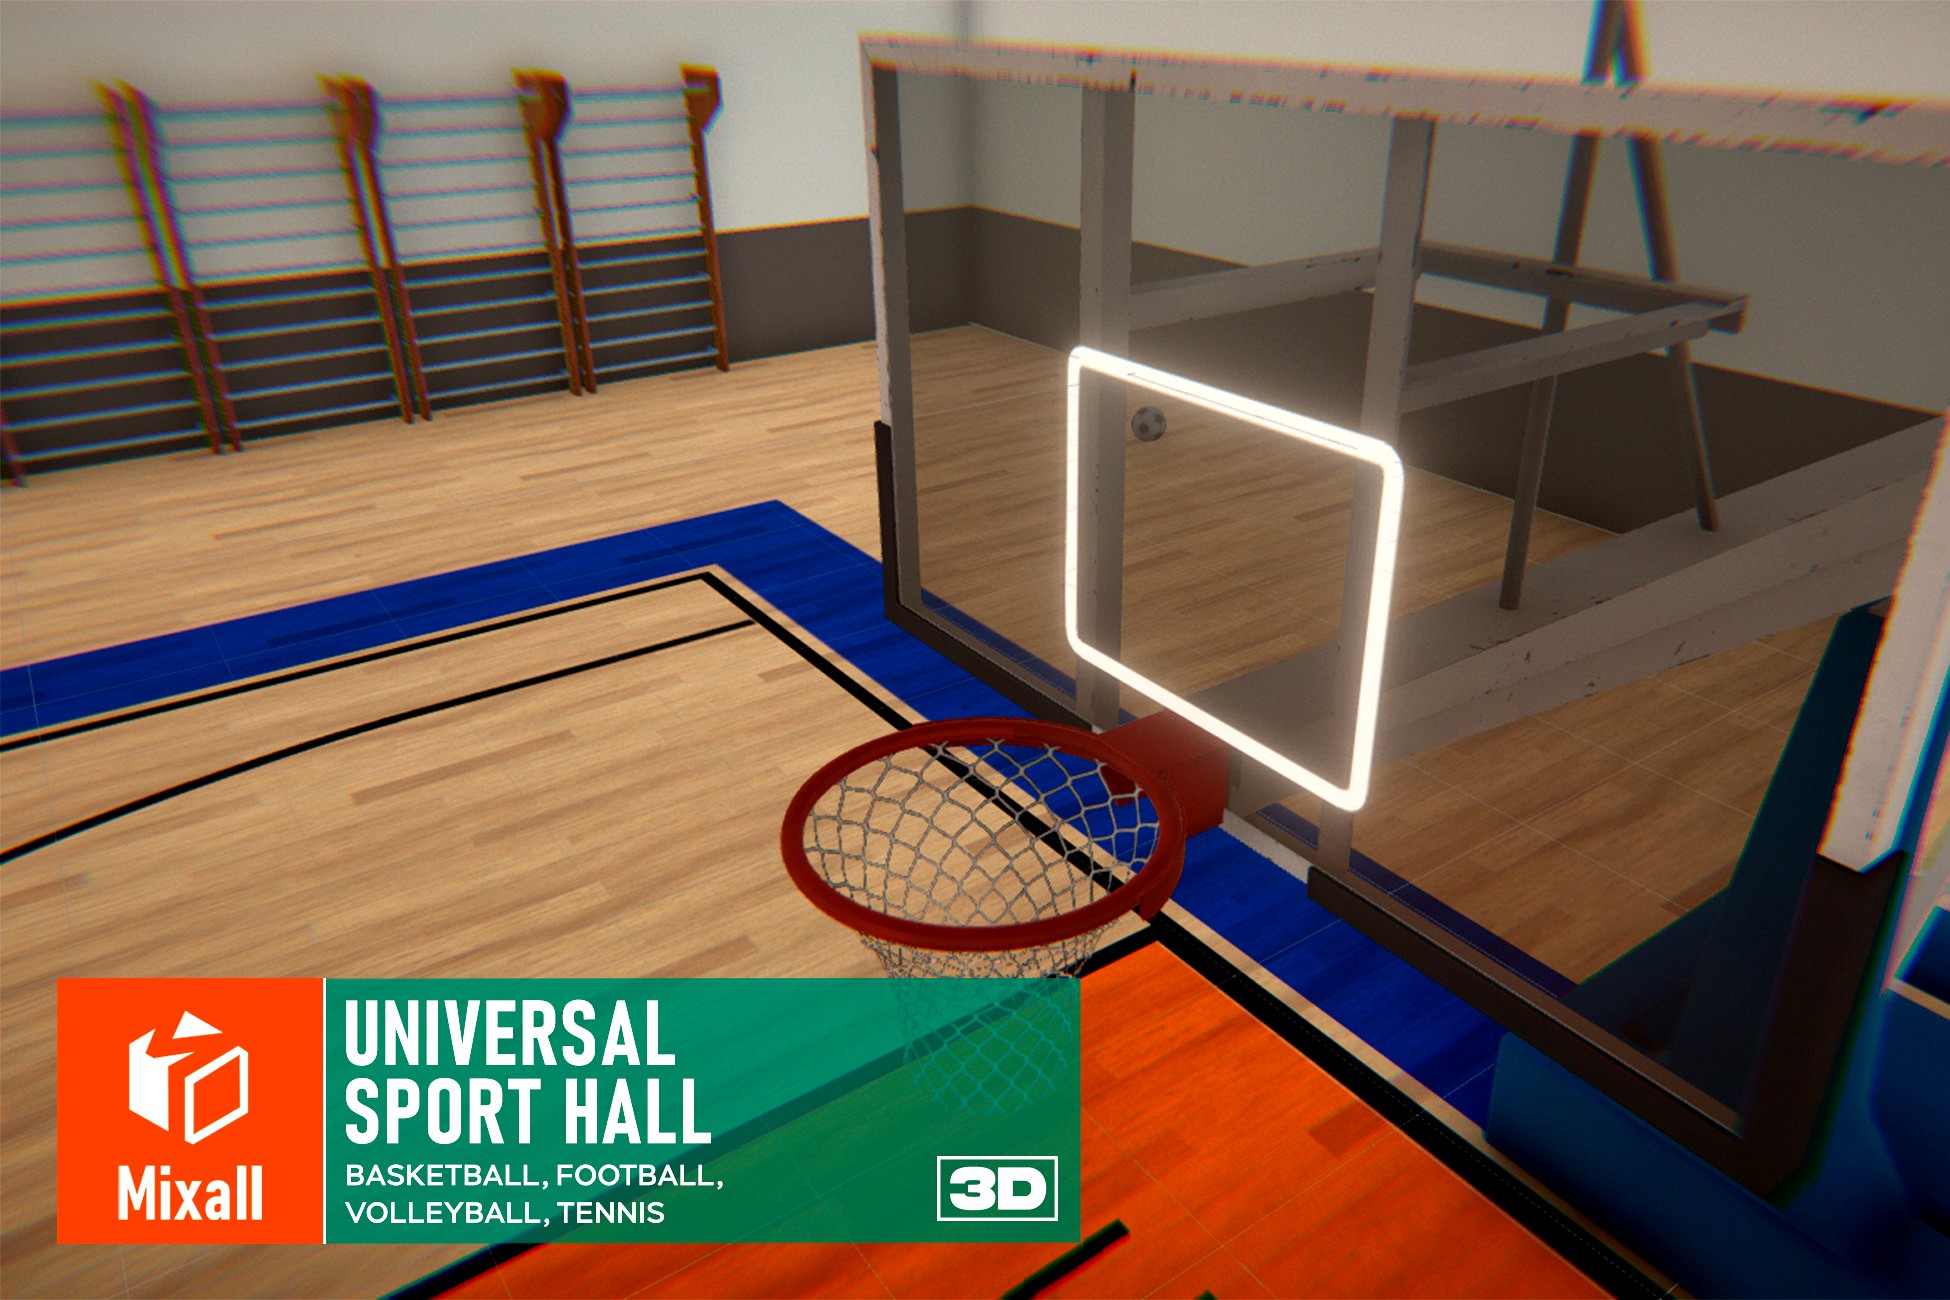 Universal sport hall - basketball, football, volleyball, tennis